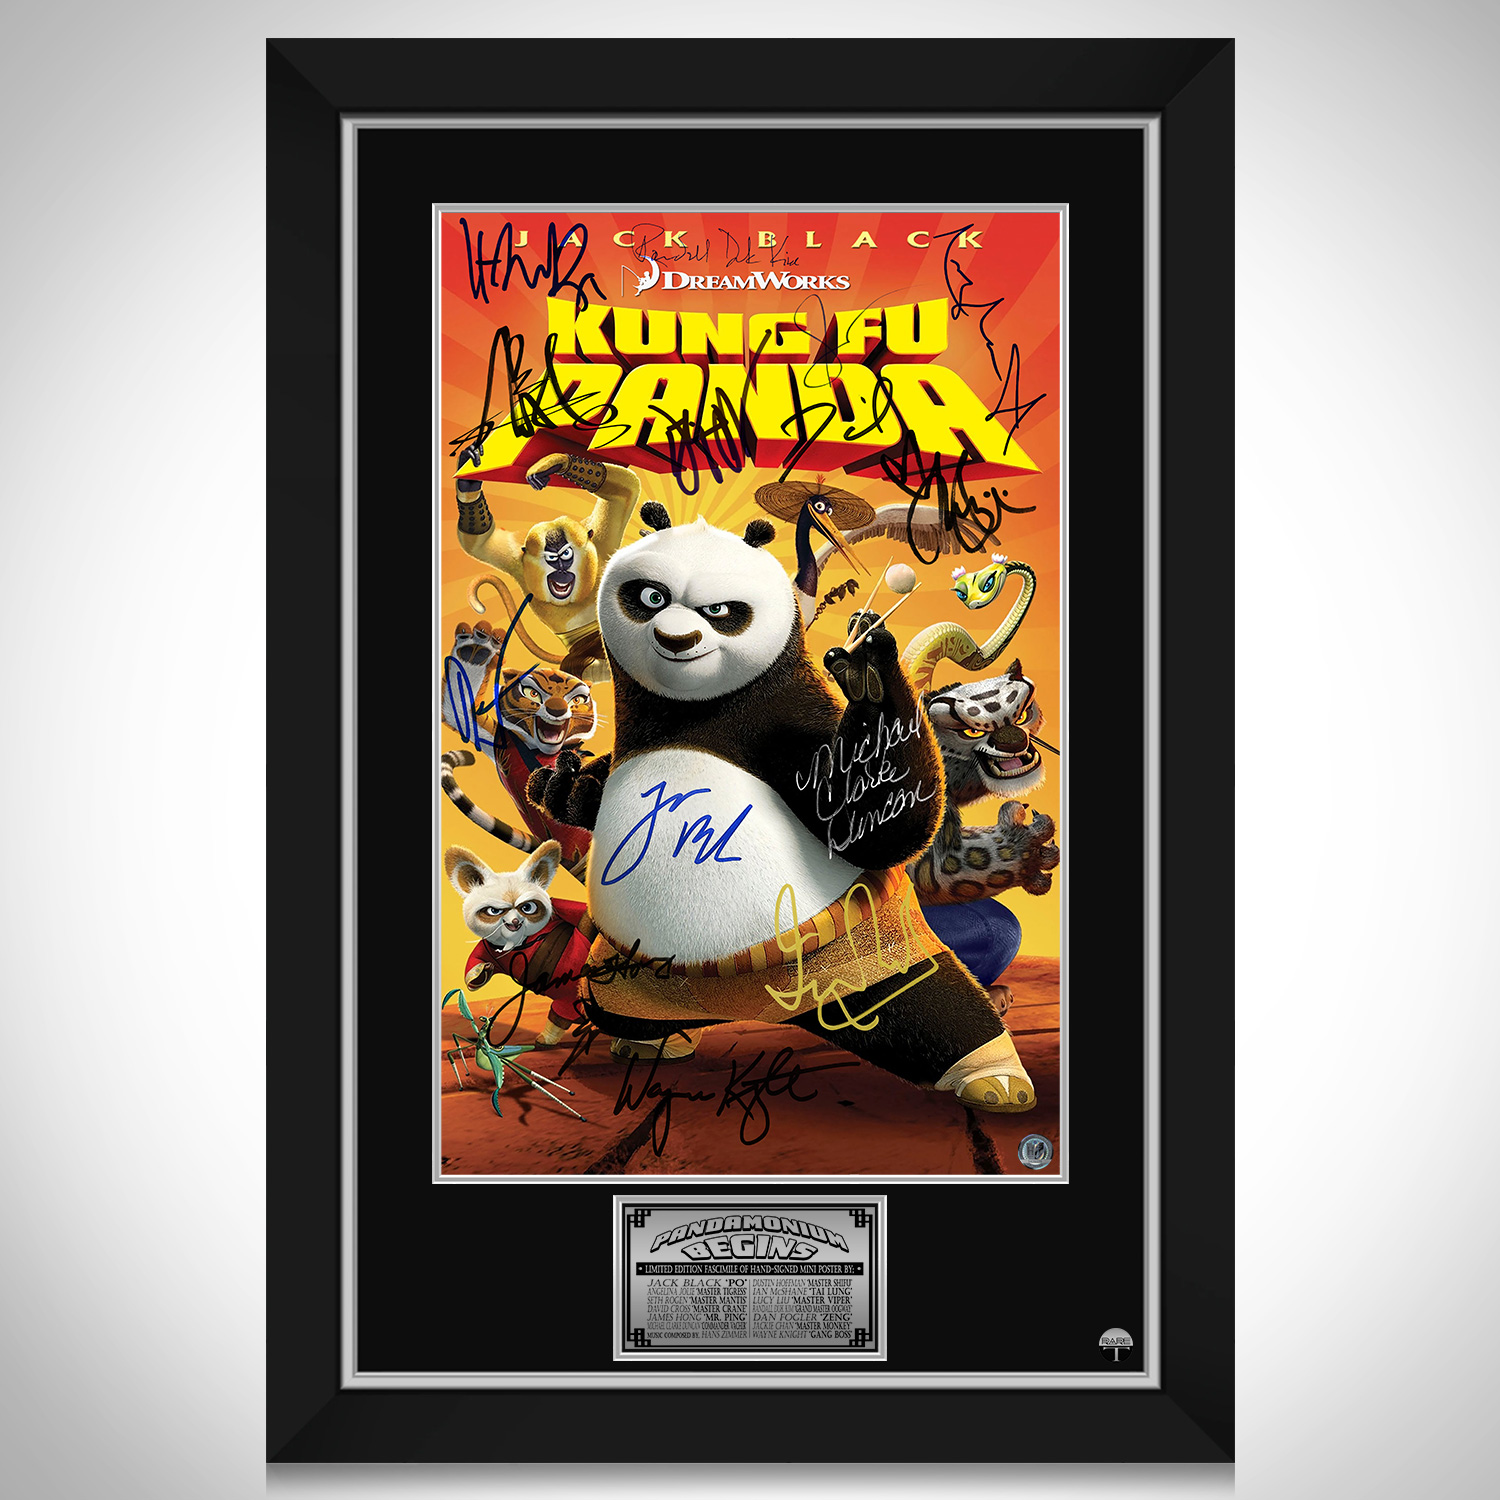 kung fu panda 1 poster